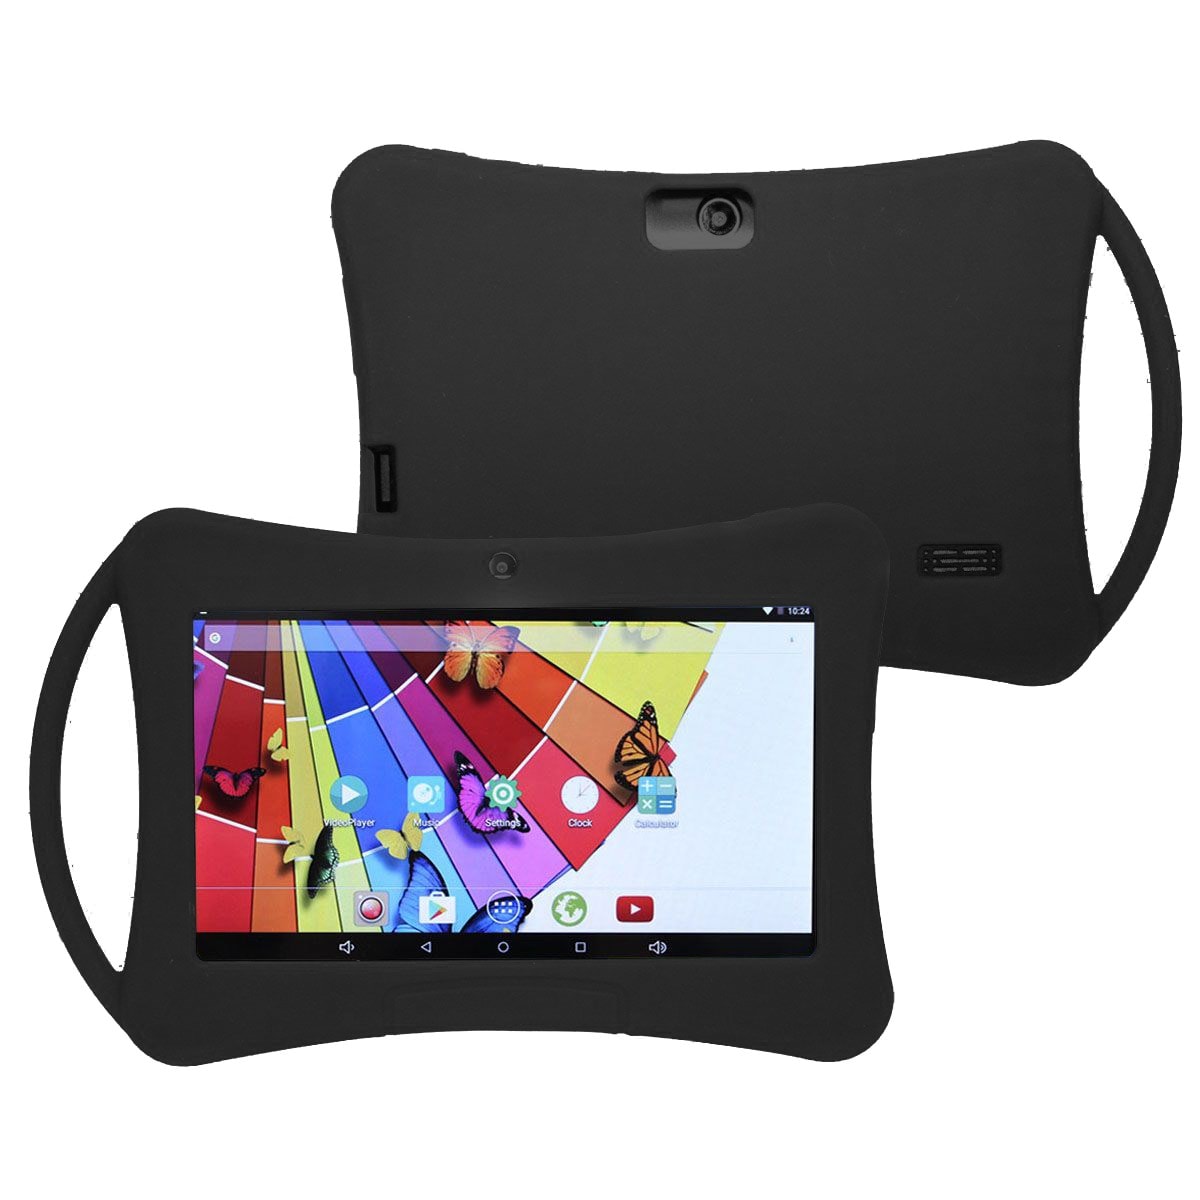 Coque tablette 7 pouces protection silicone souple universelle